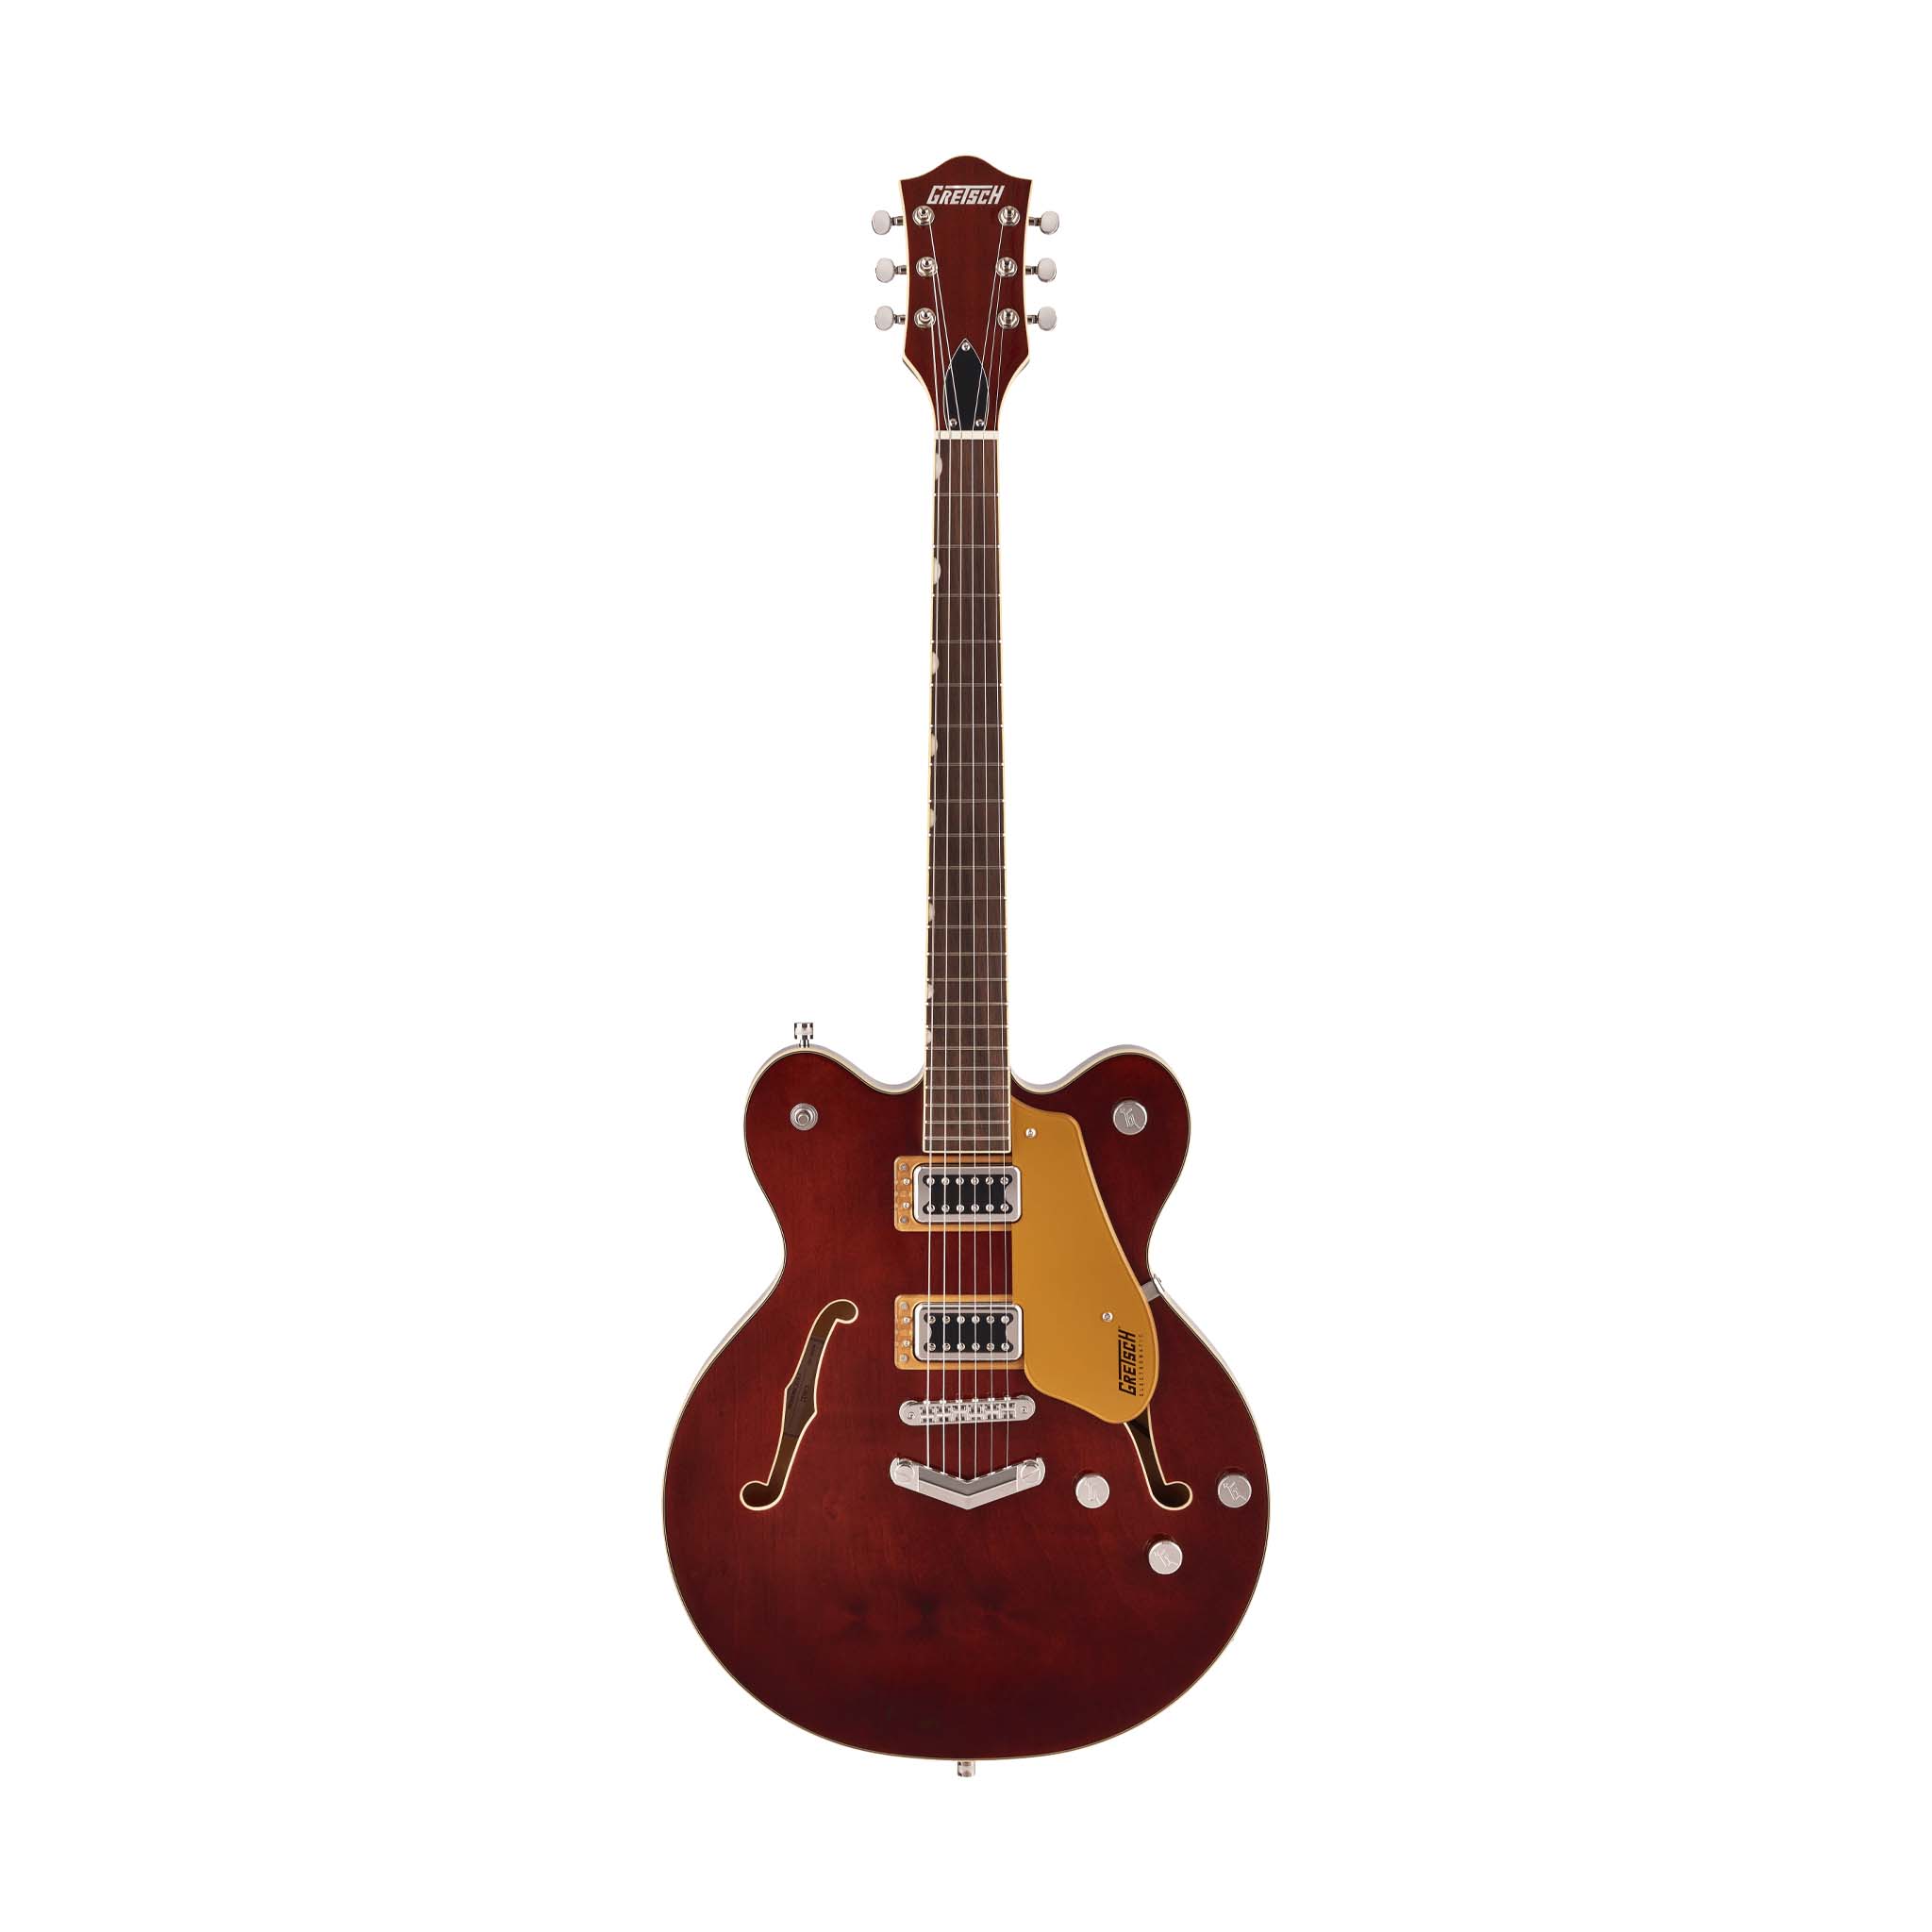 Gretsch G5622 Electromatic Center Block Double-Cut Electric Guitar